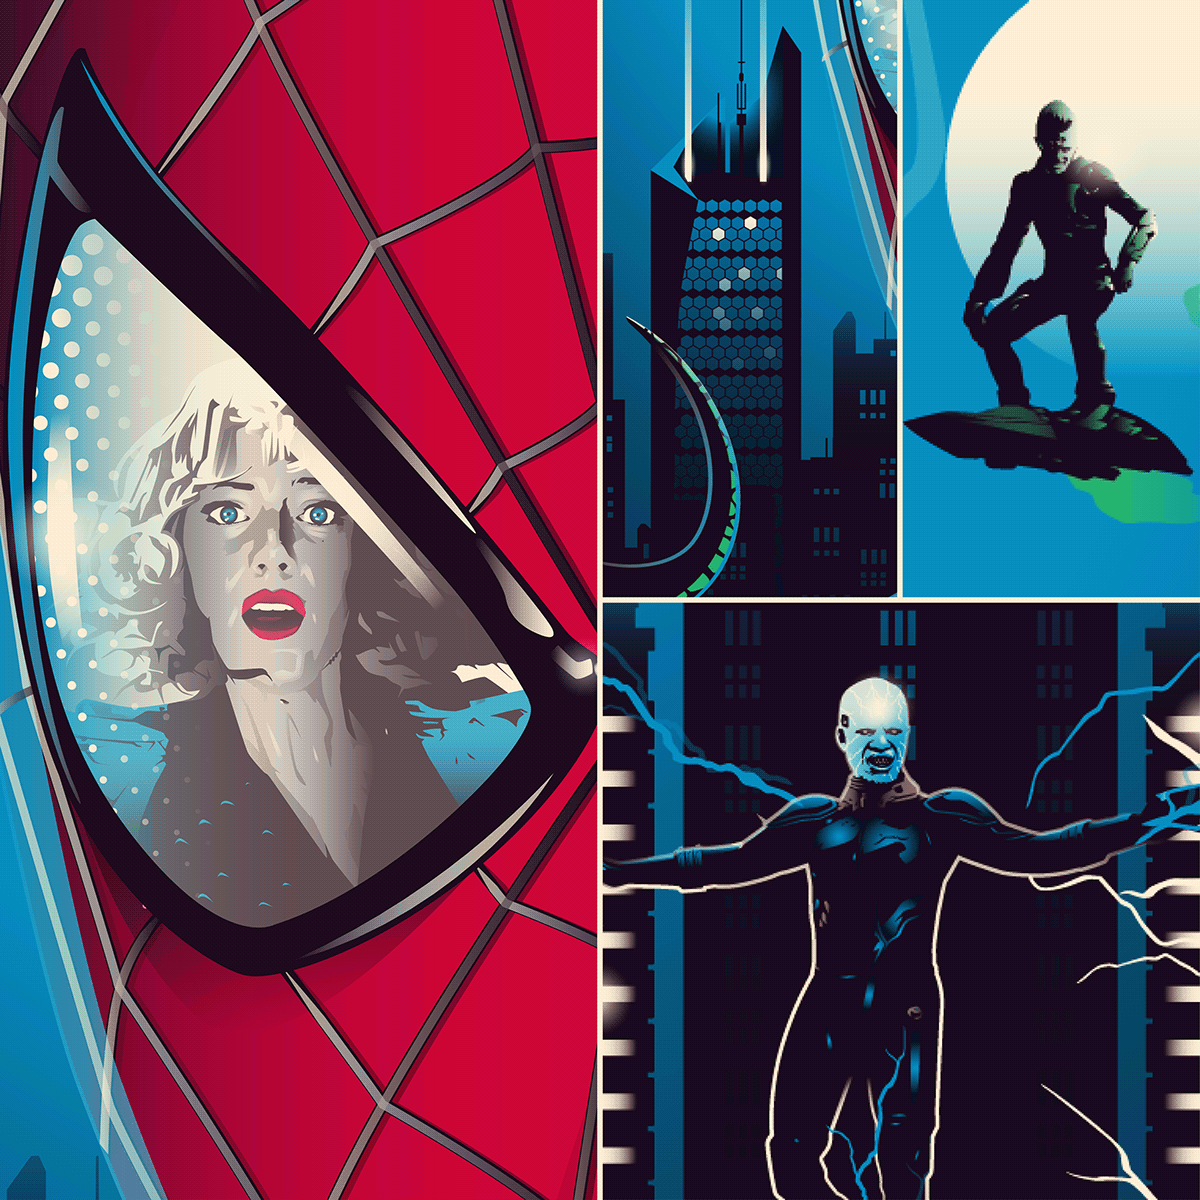 The Amazing Spider-Man Poster Art / Vinyl Cover On Behance